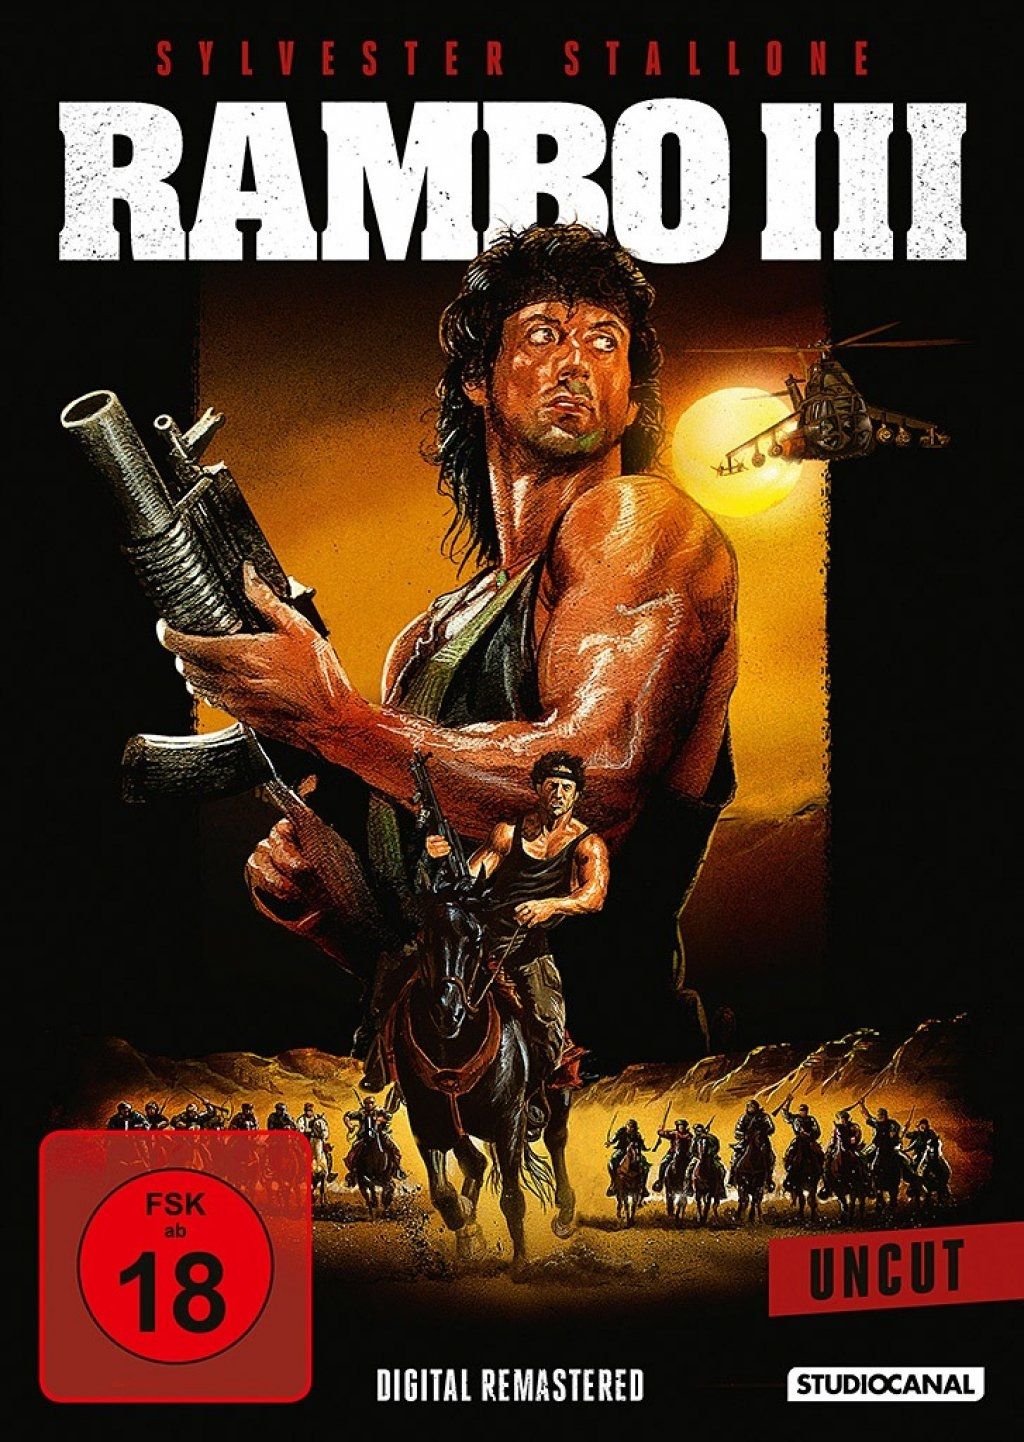 Rambo III (Uncut) (Digital Remastered)